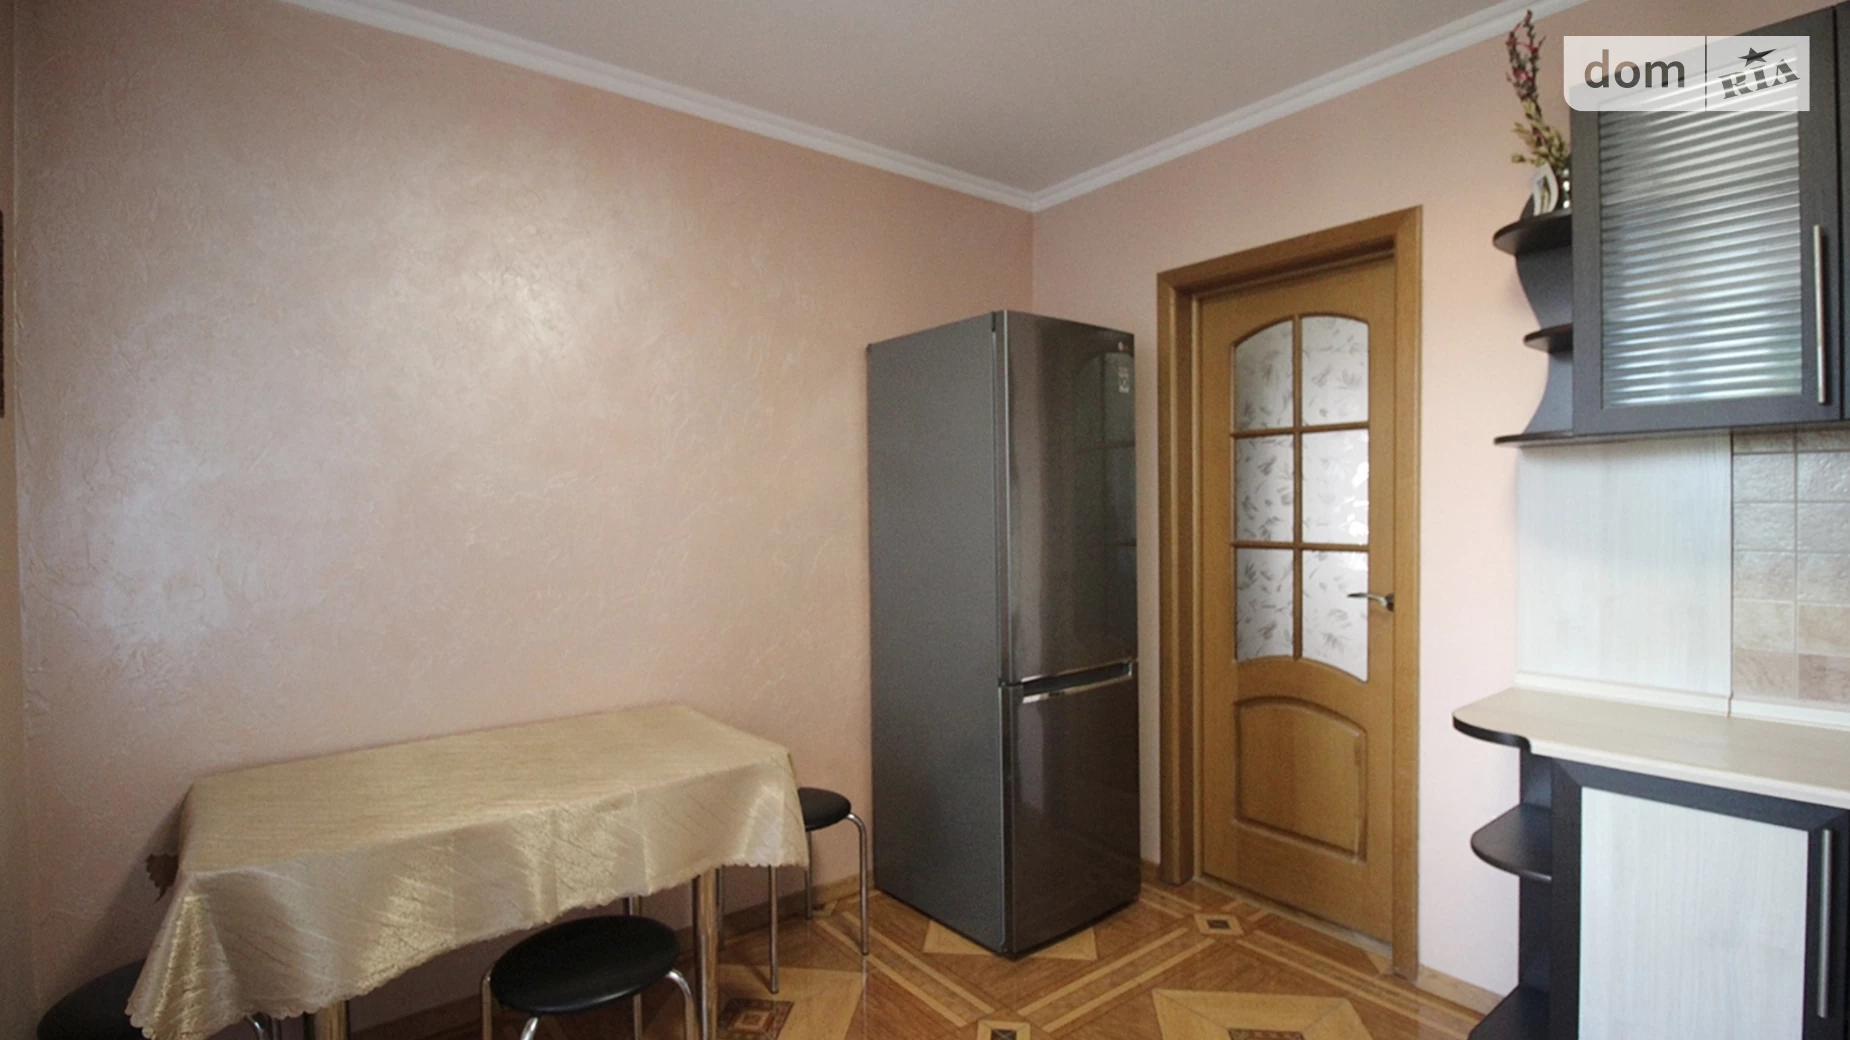 Продается 3-комнатная квартира 87.5 кв. м в Ивано-Франковске - фото 4